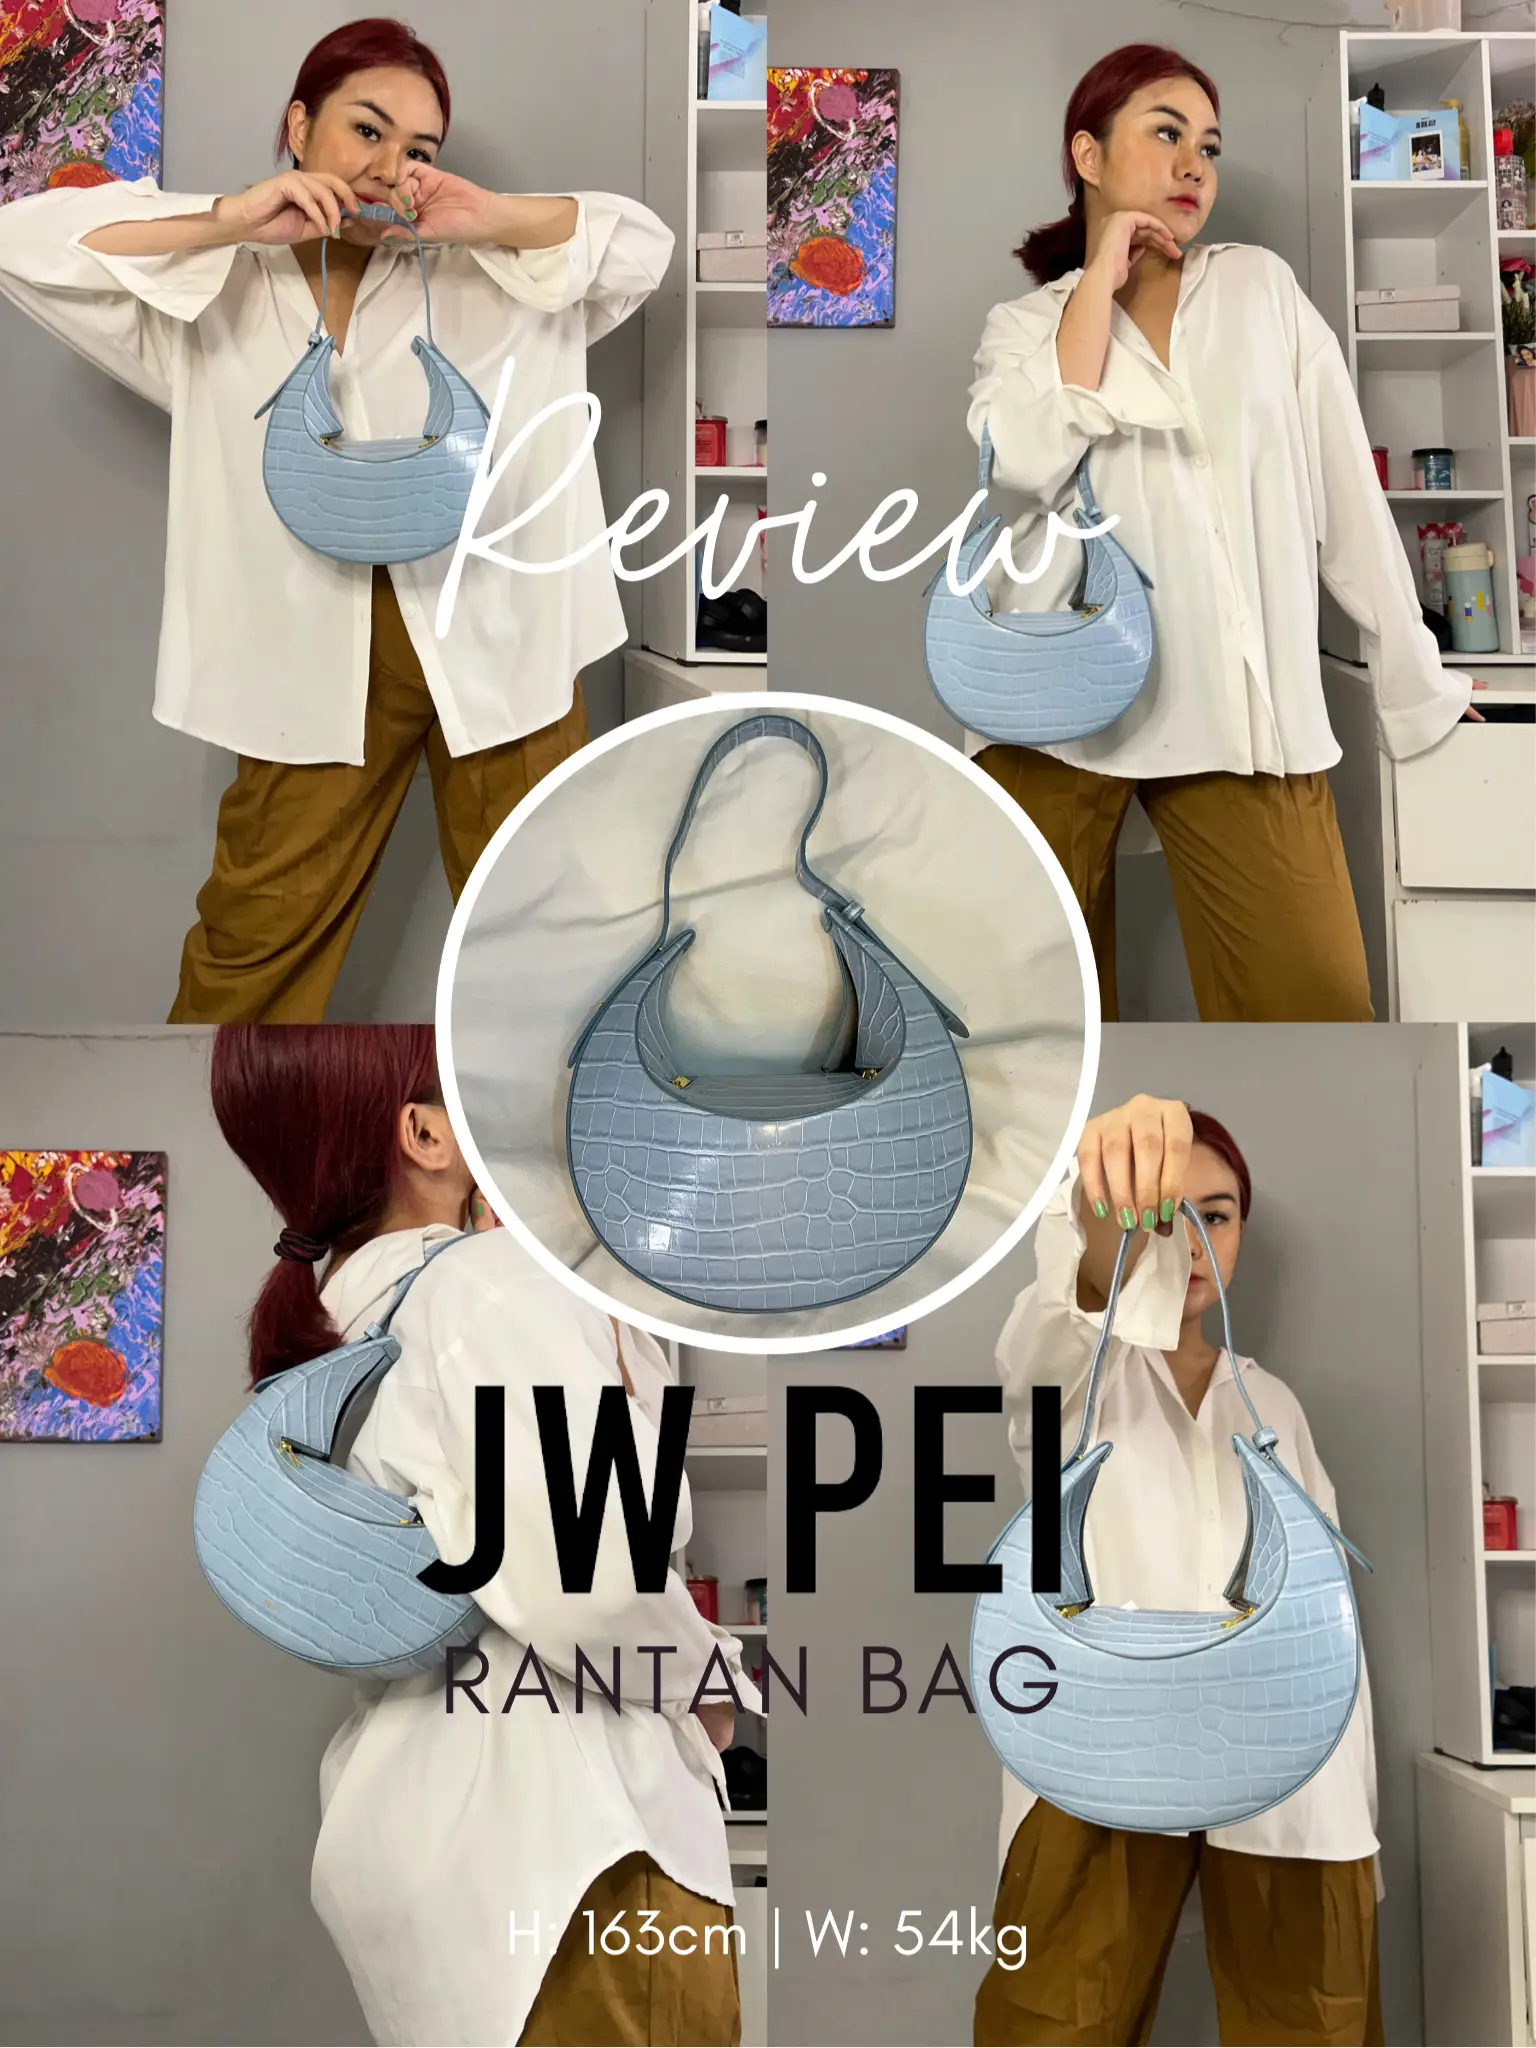 REVIEW JW PEI ✨Rantan Bag✨  Gallery posted by Karin Dennisha